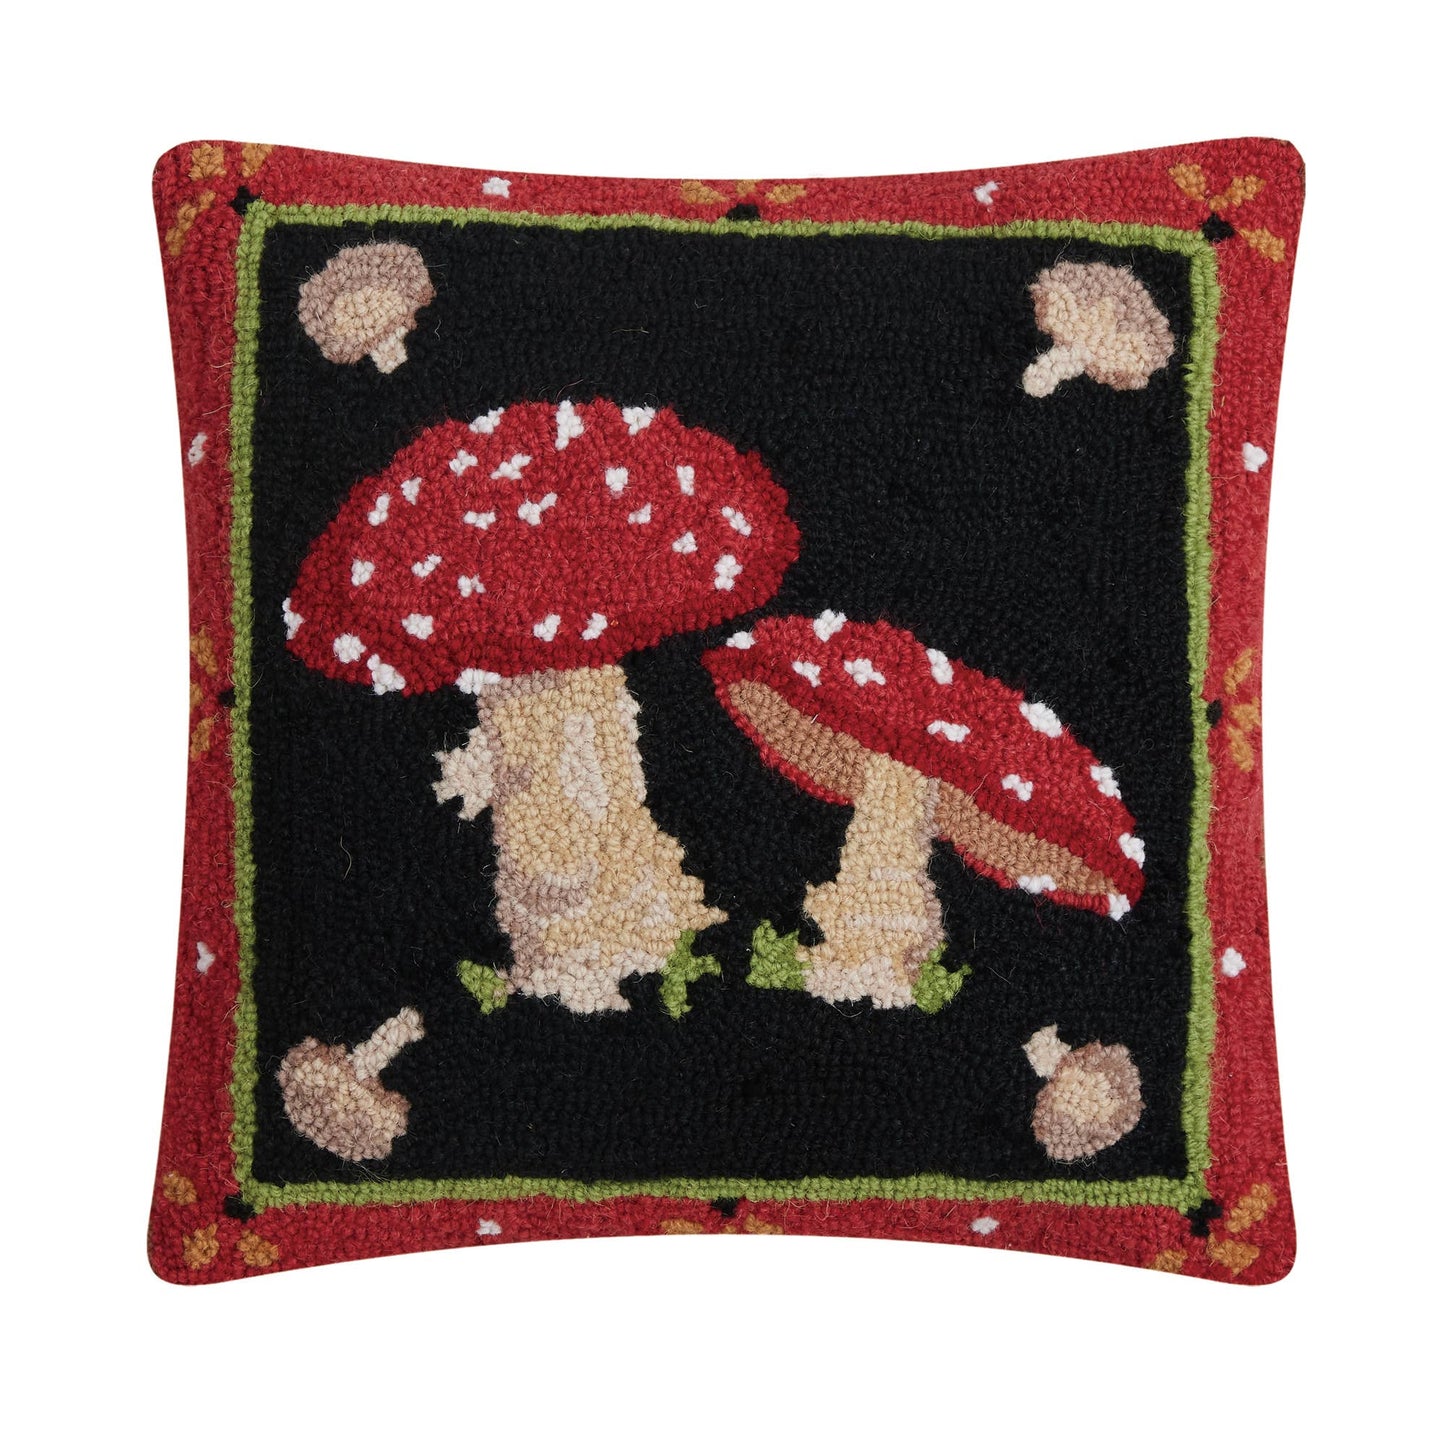 Mushroom Mania Hook Pillow